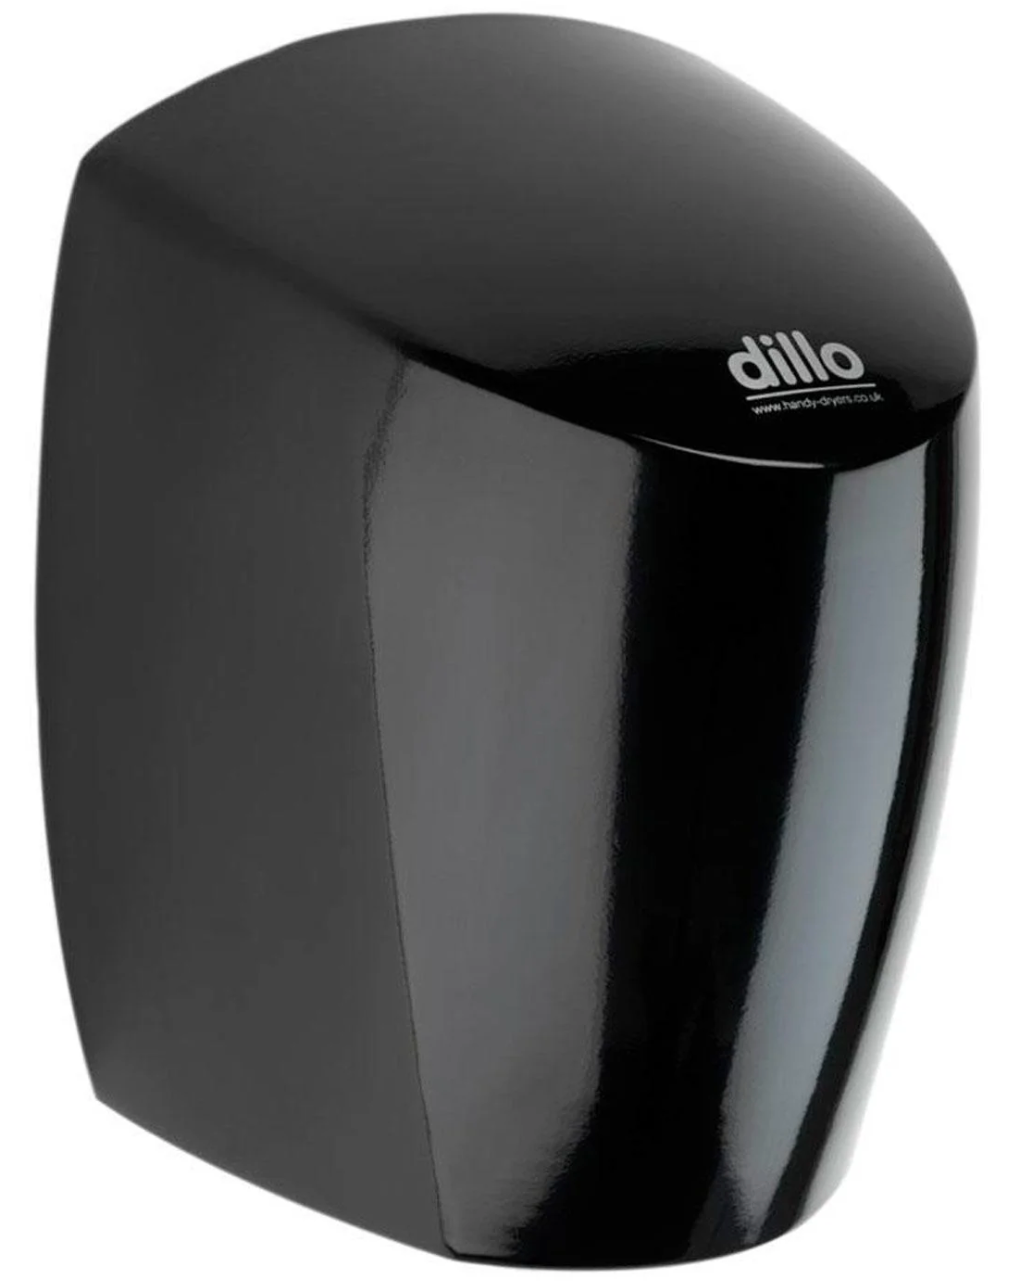 Dillo Hand Dryer, Black